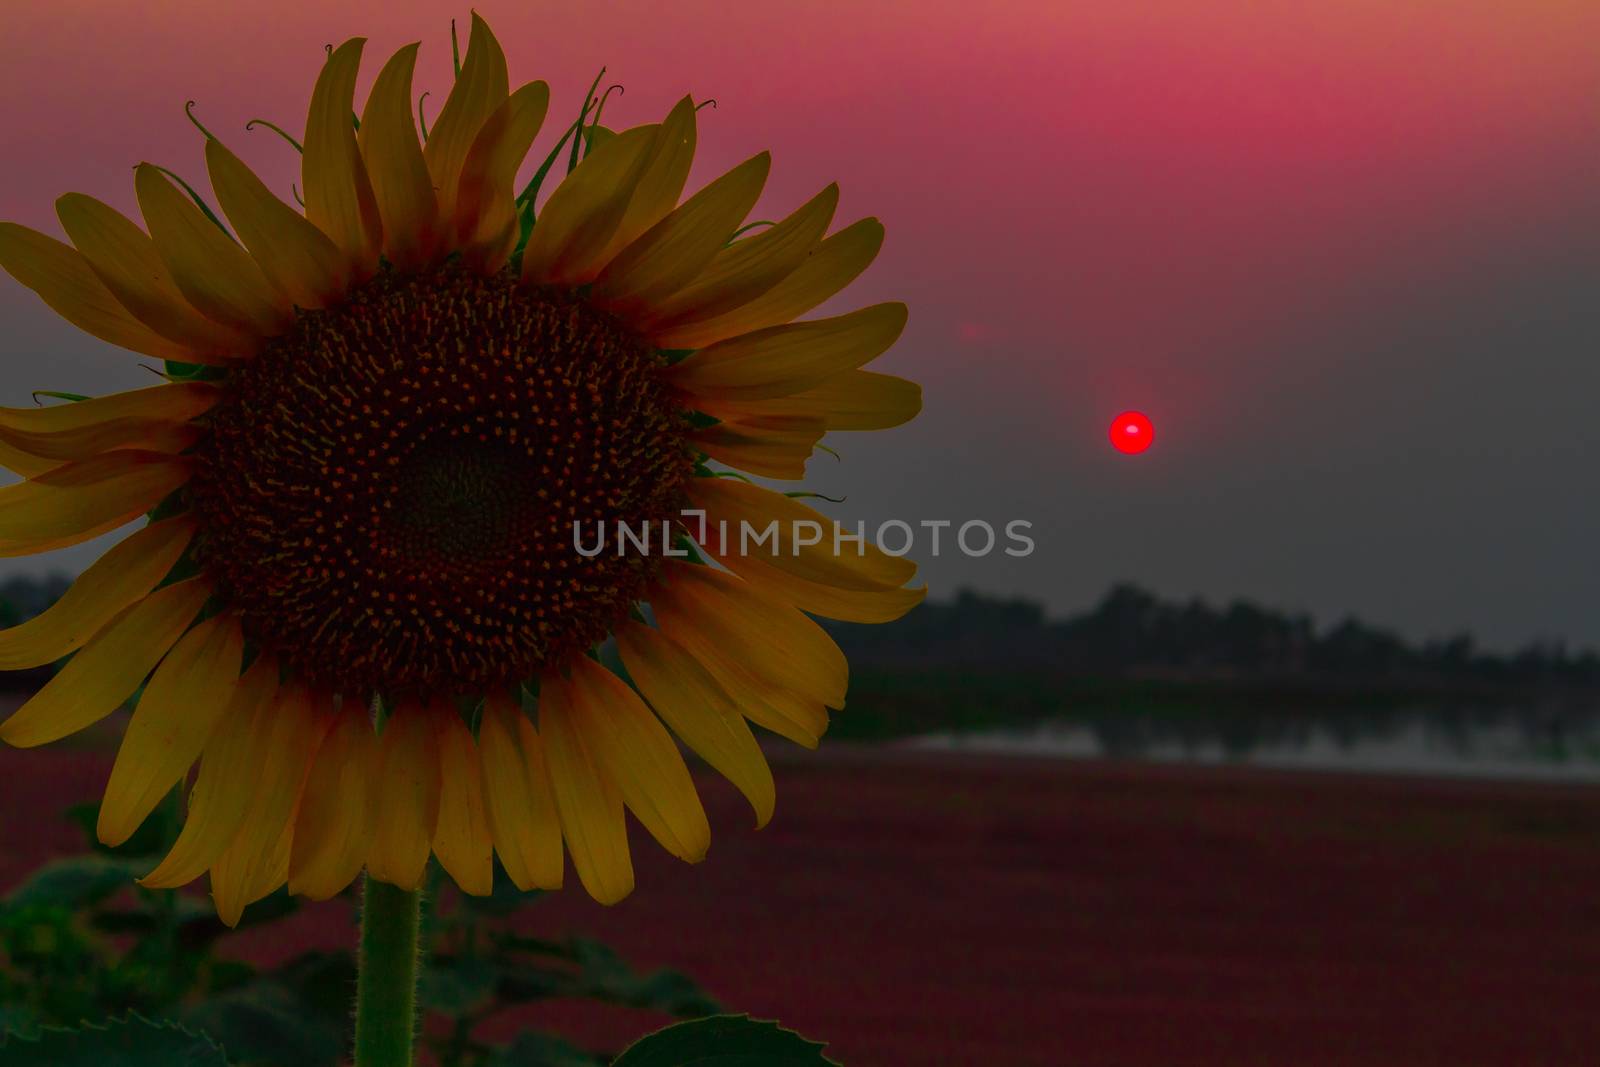 Silhouette of sunflower in the field at sunset, feeling dark ton by pt.pongsak@gmail.com